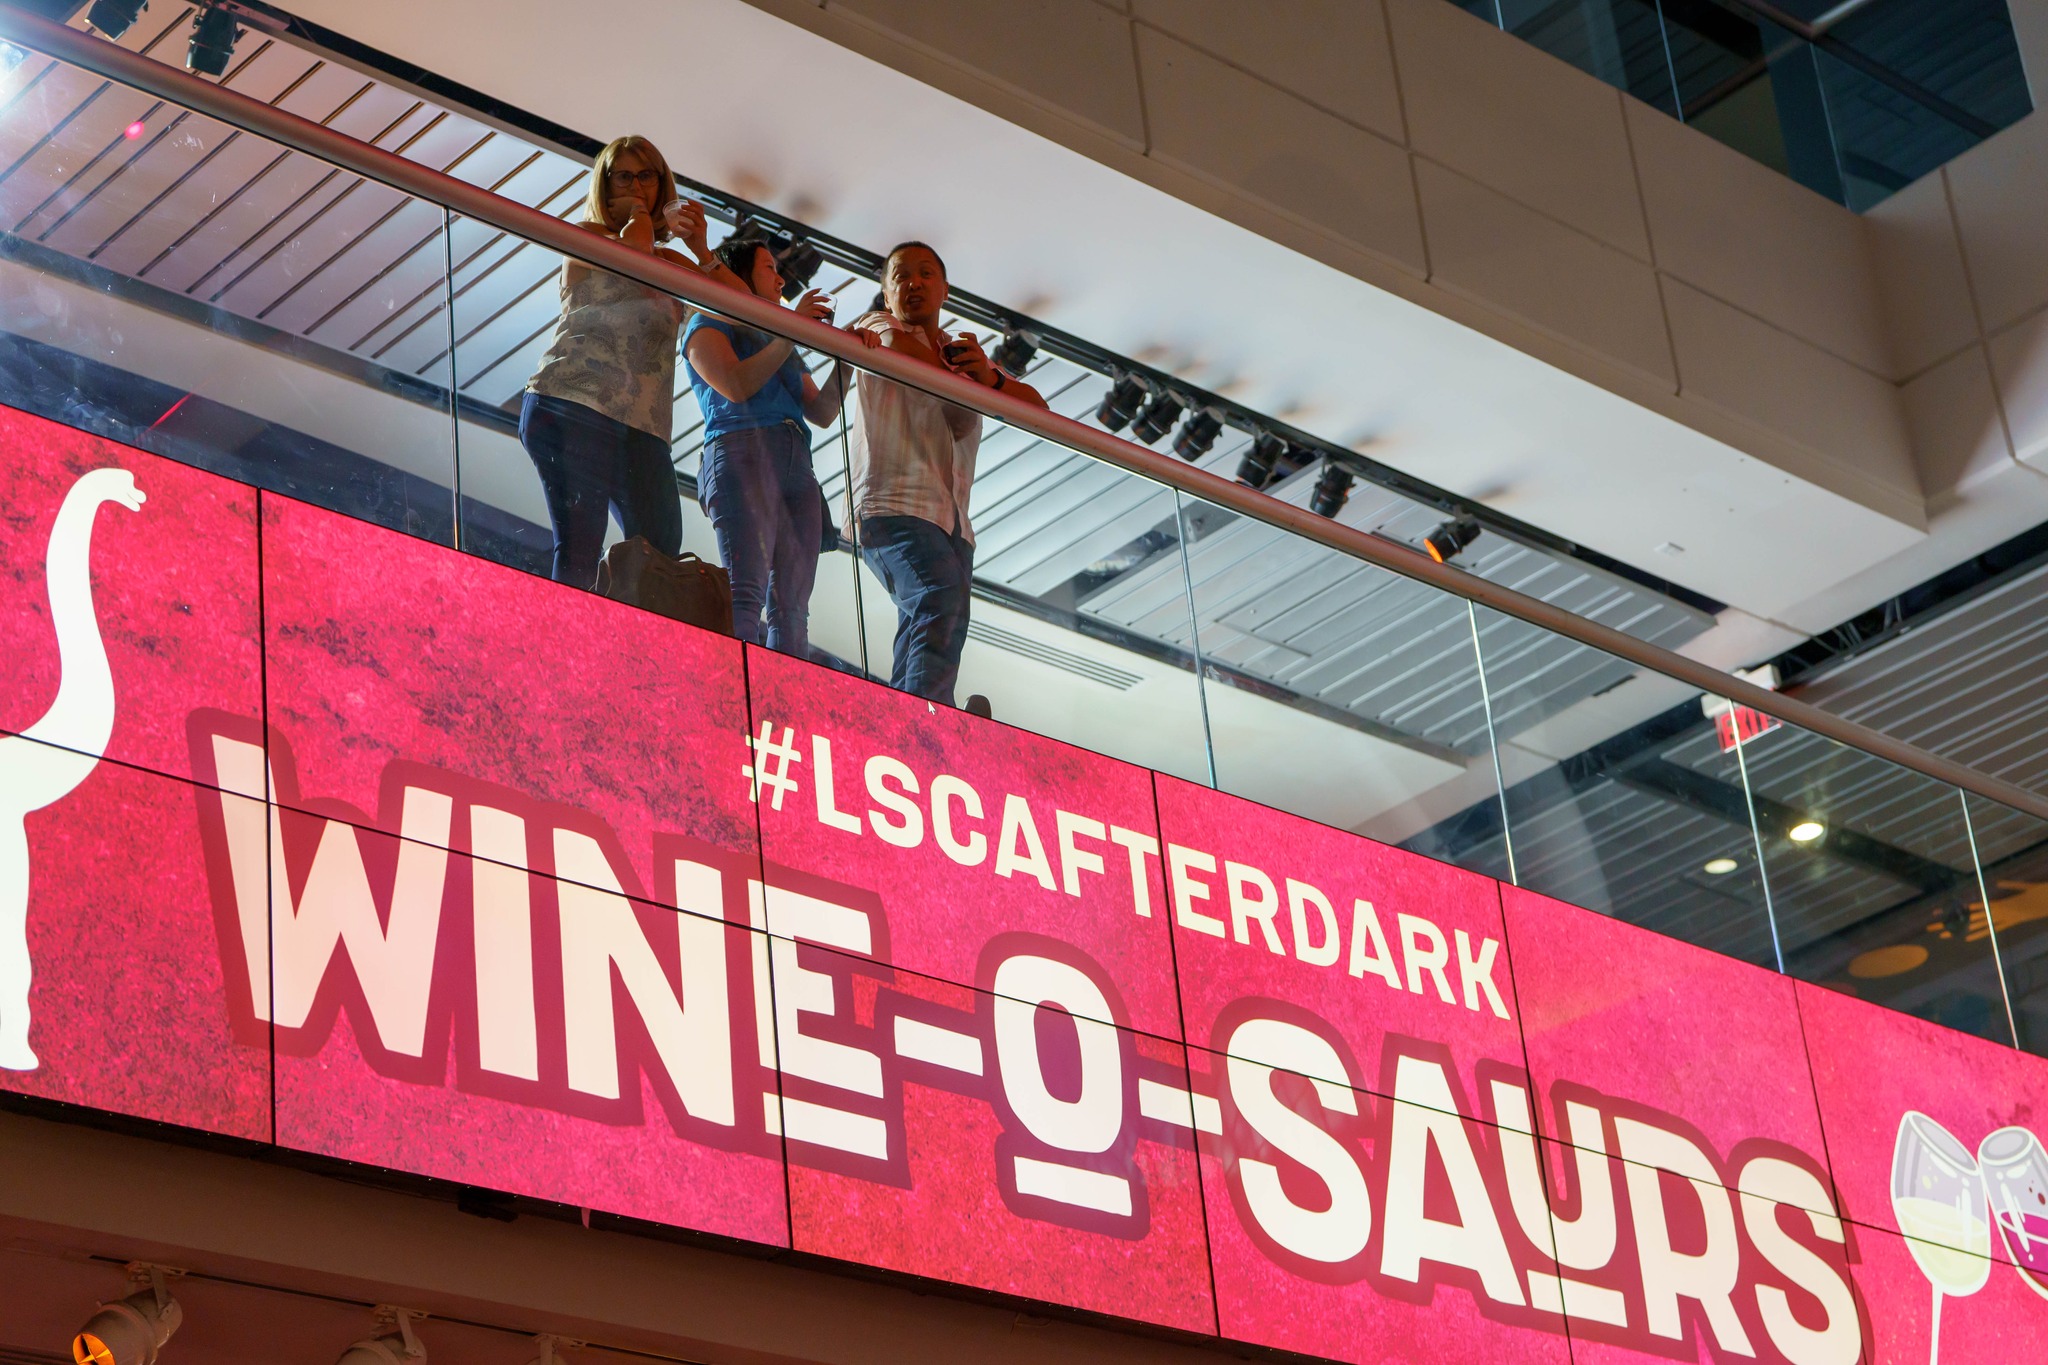 Guests having fun at LSC After Dark: Wine-O-Saurs